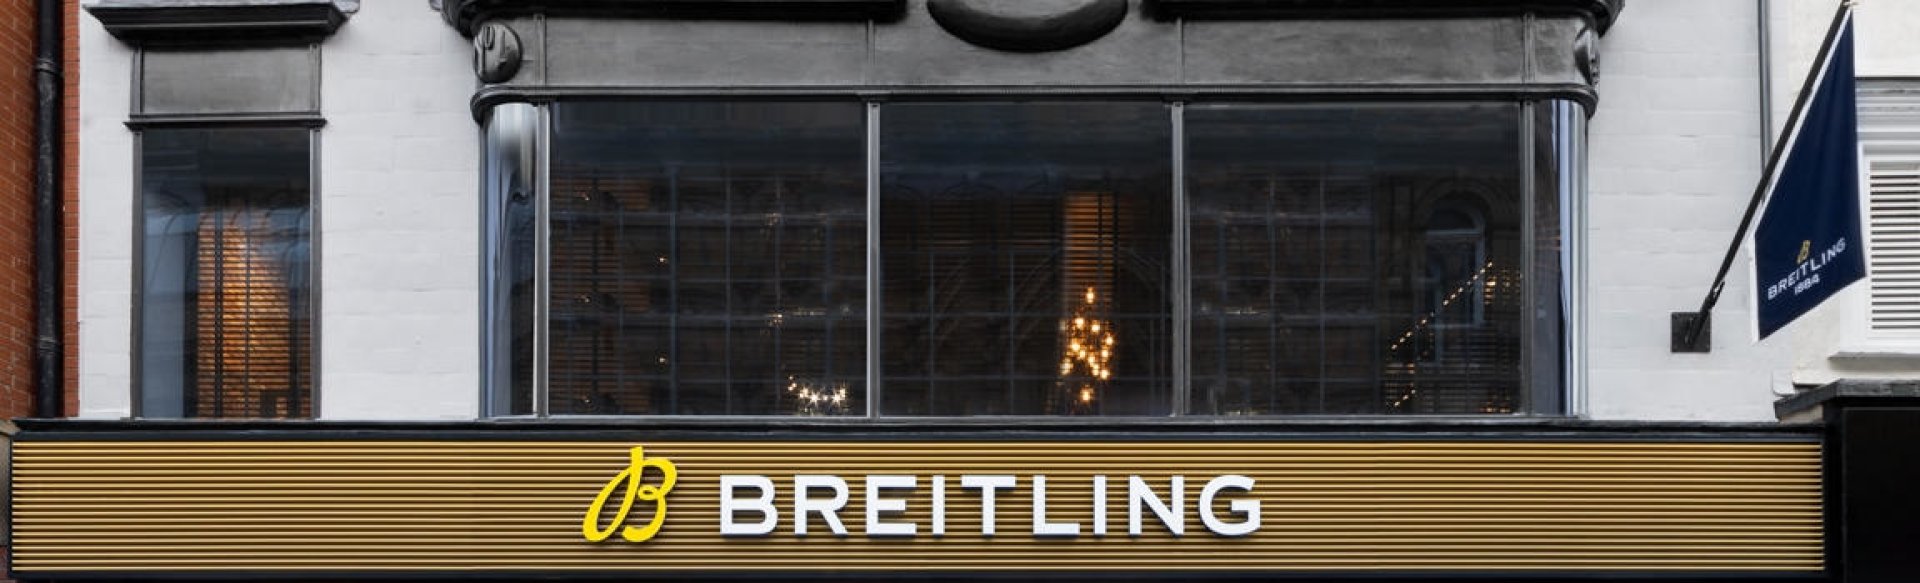 Breitling Boutique Leeds